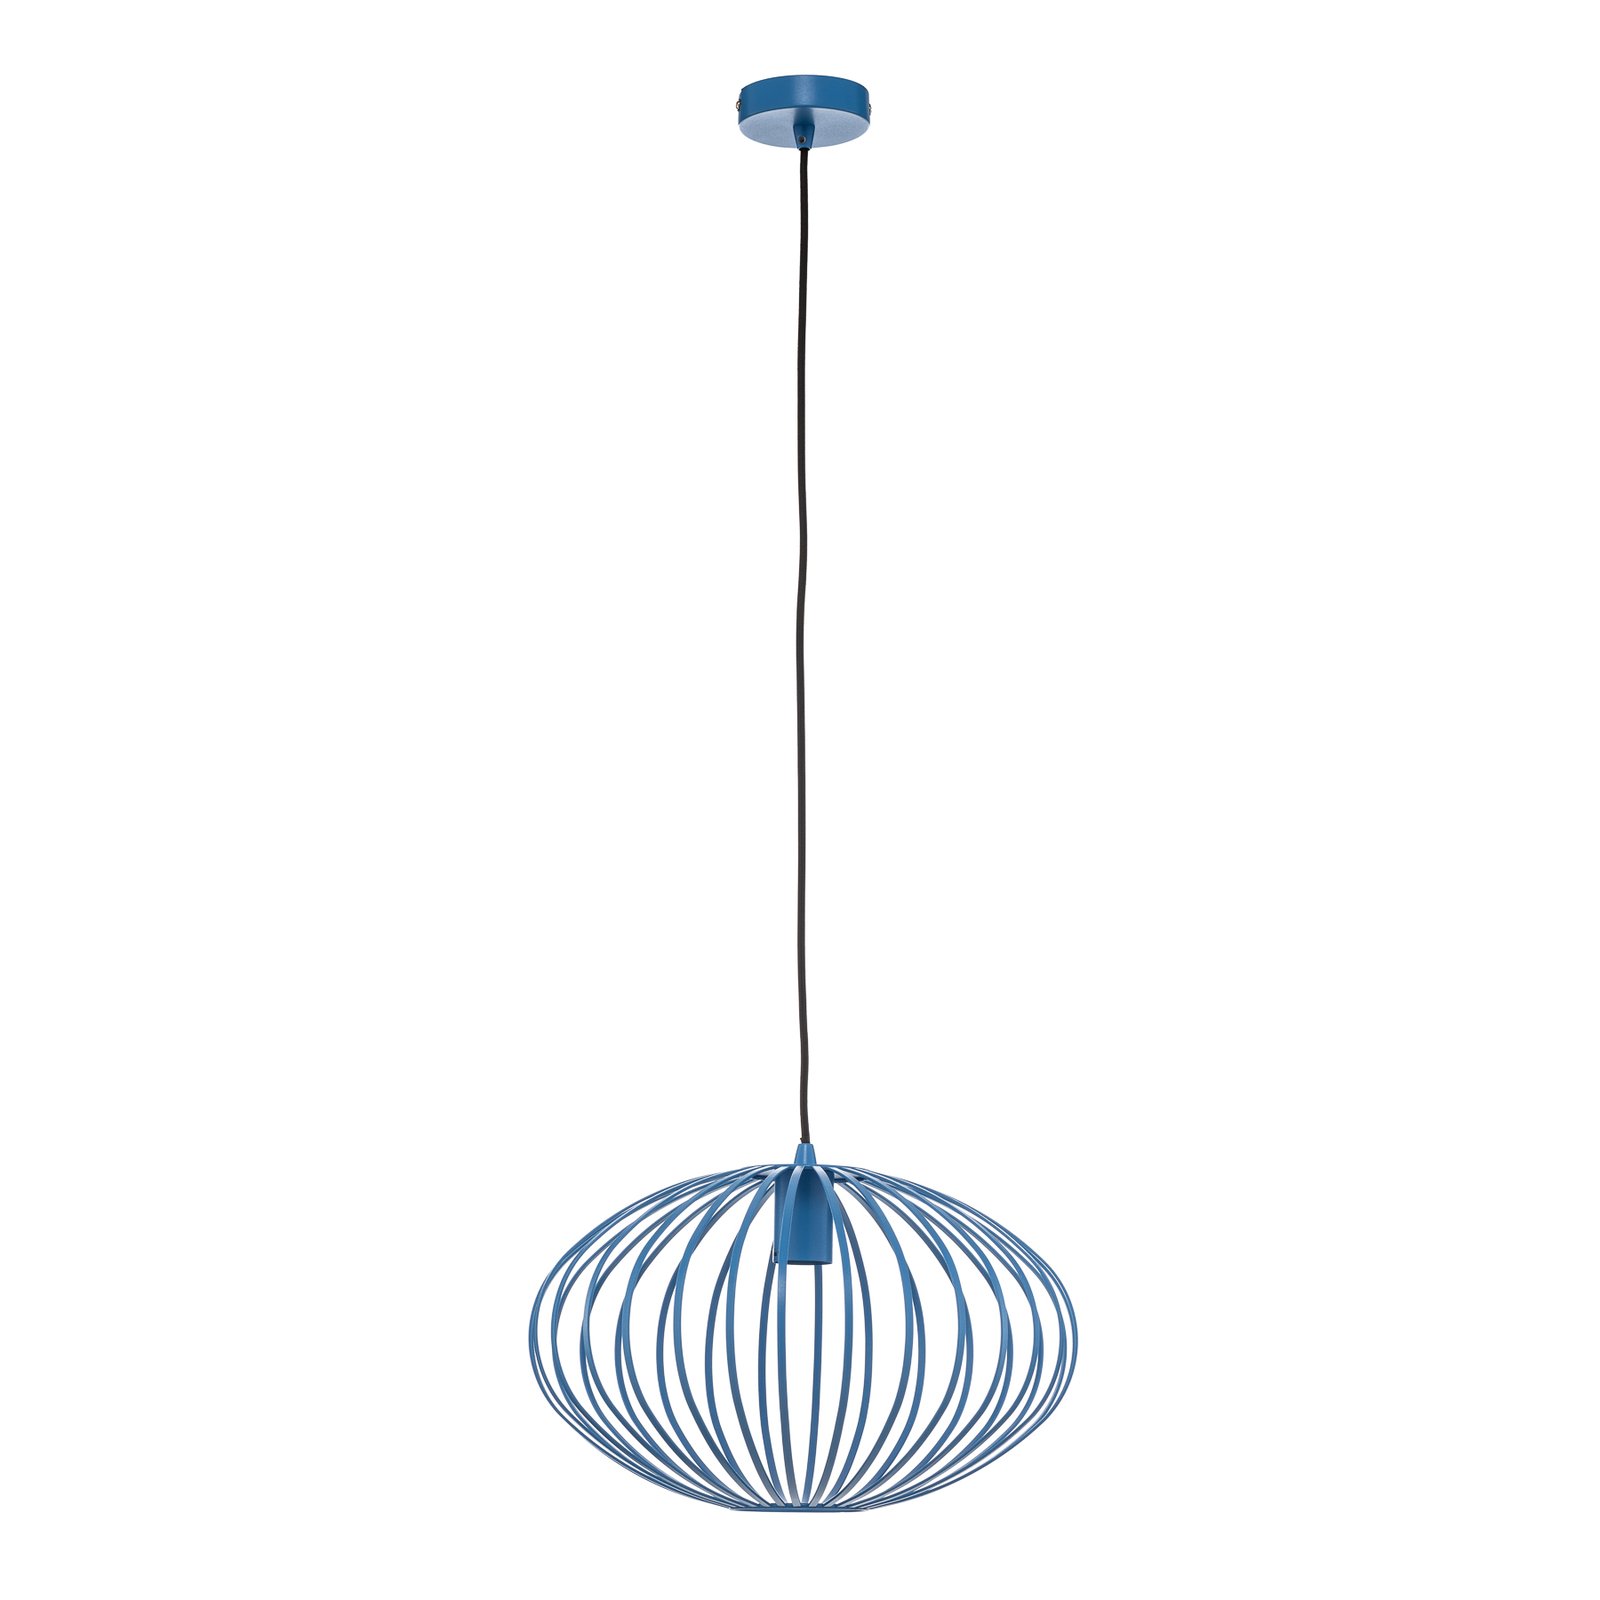 Lindby hanglamp Maivi, blauw, 40 cm, ijzer, kooi